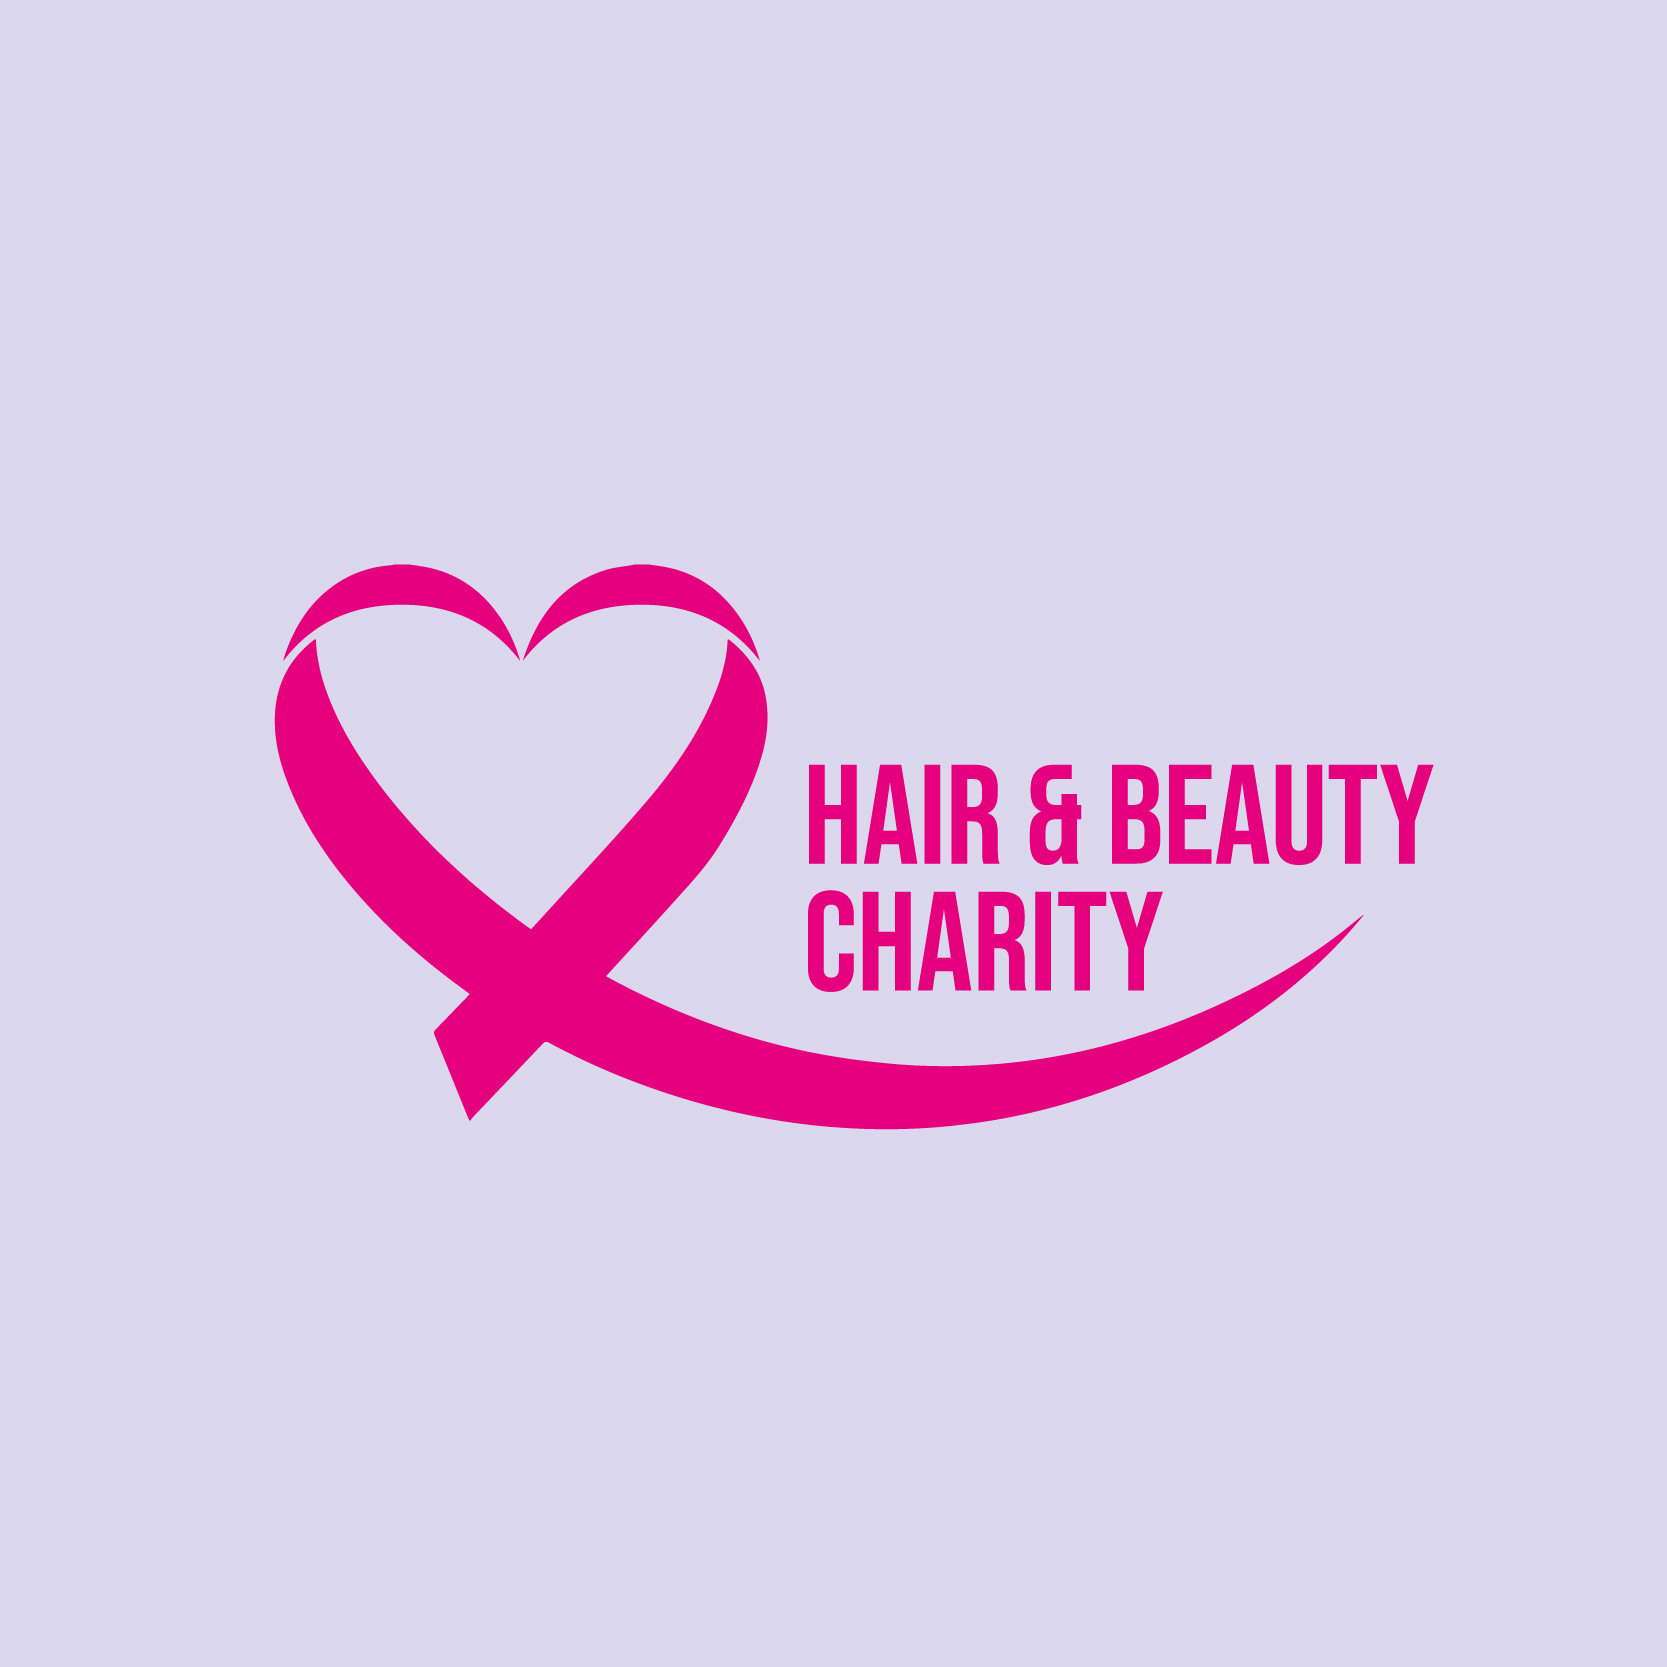 Hair and Beauty Charity logo